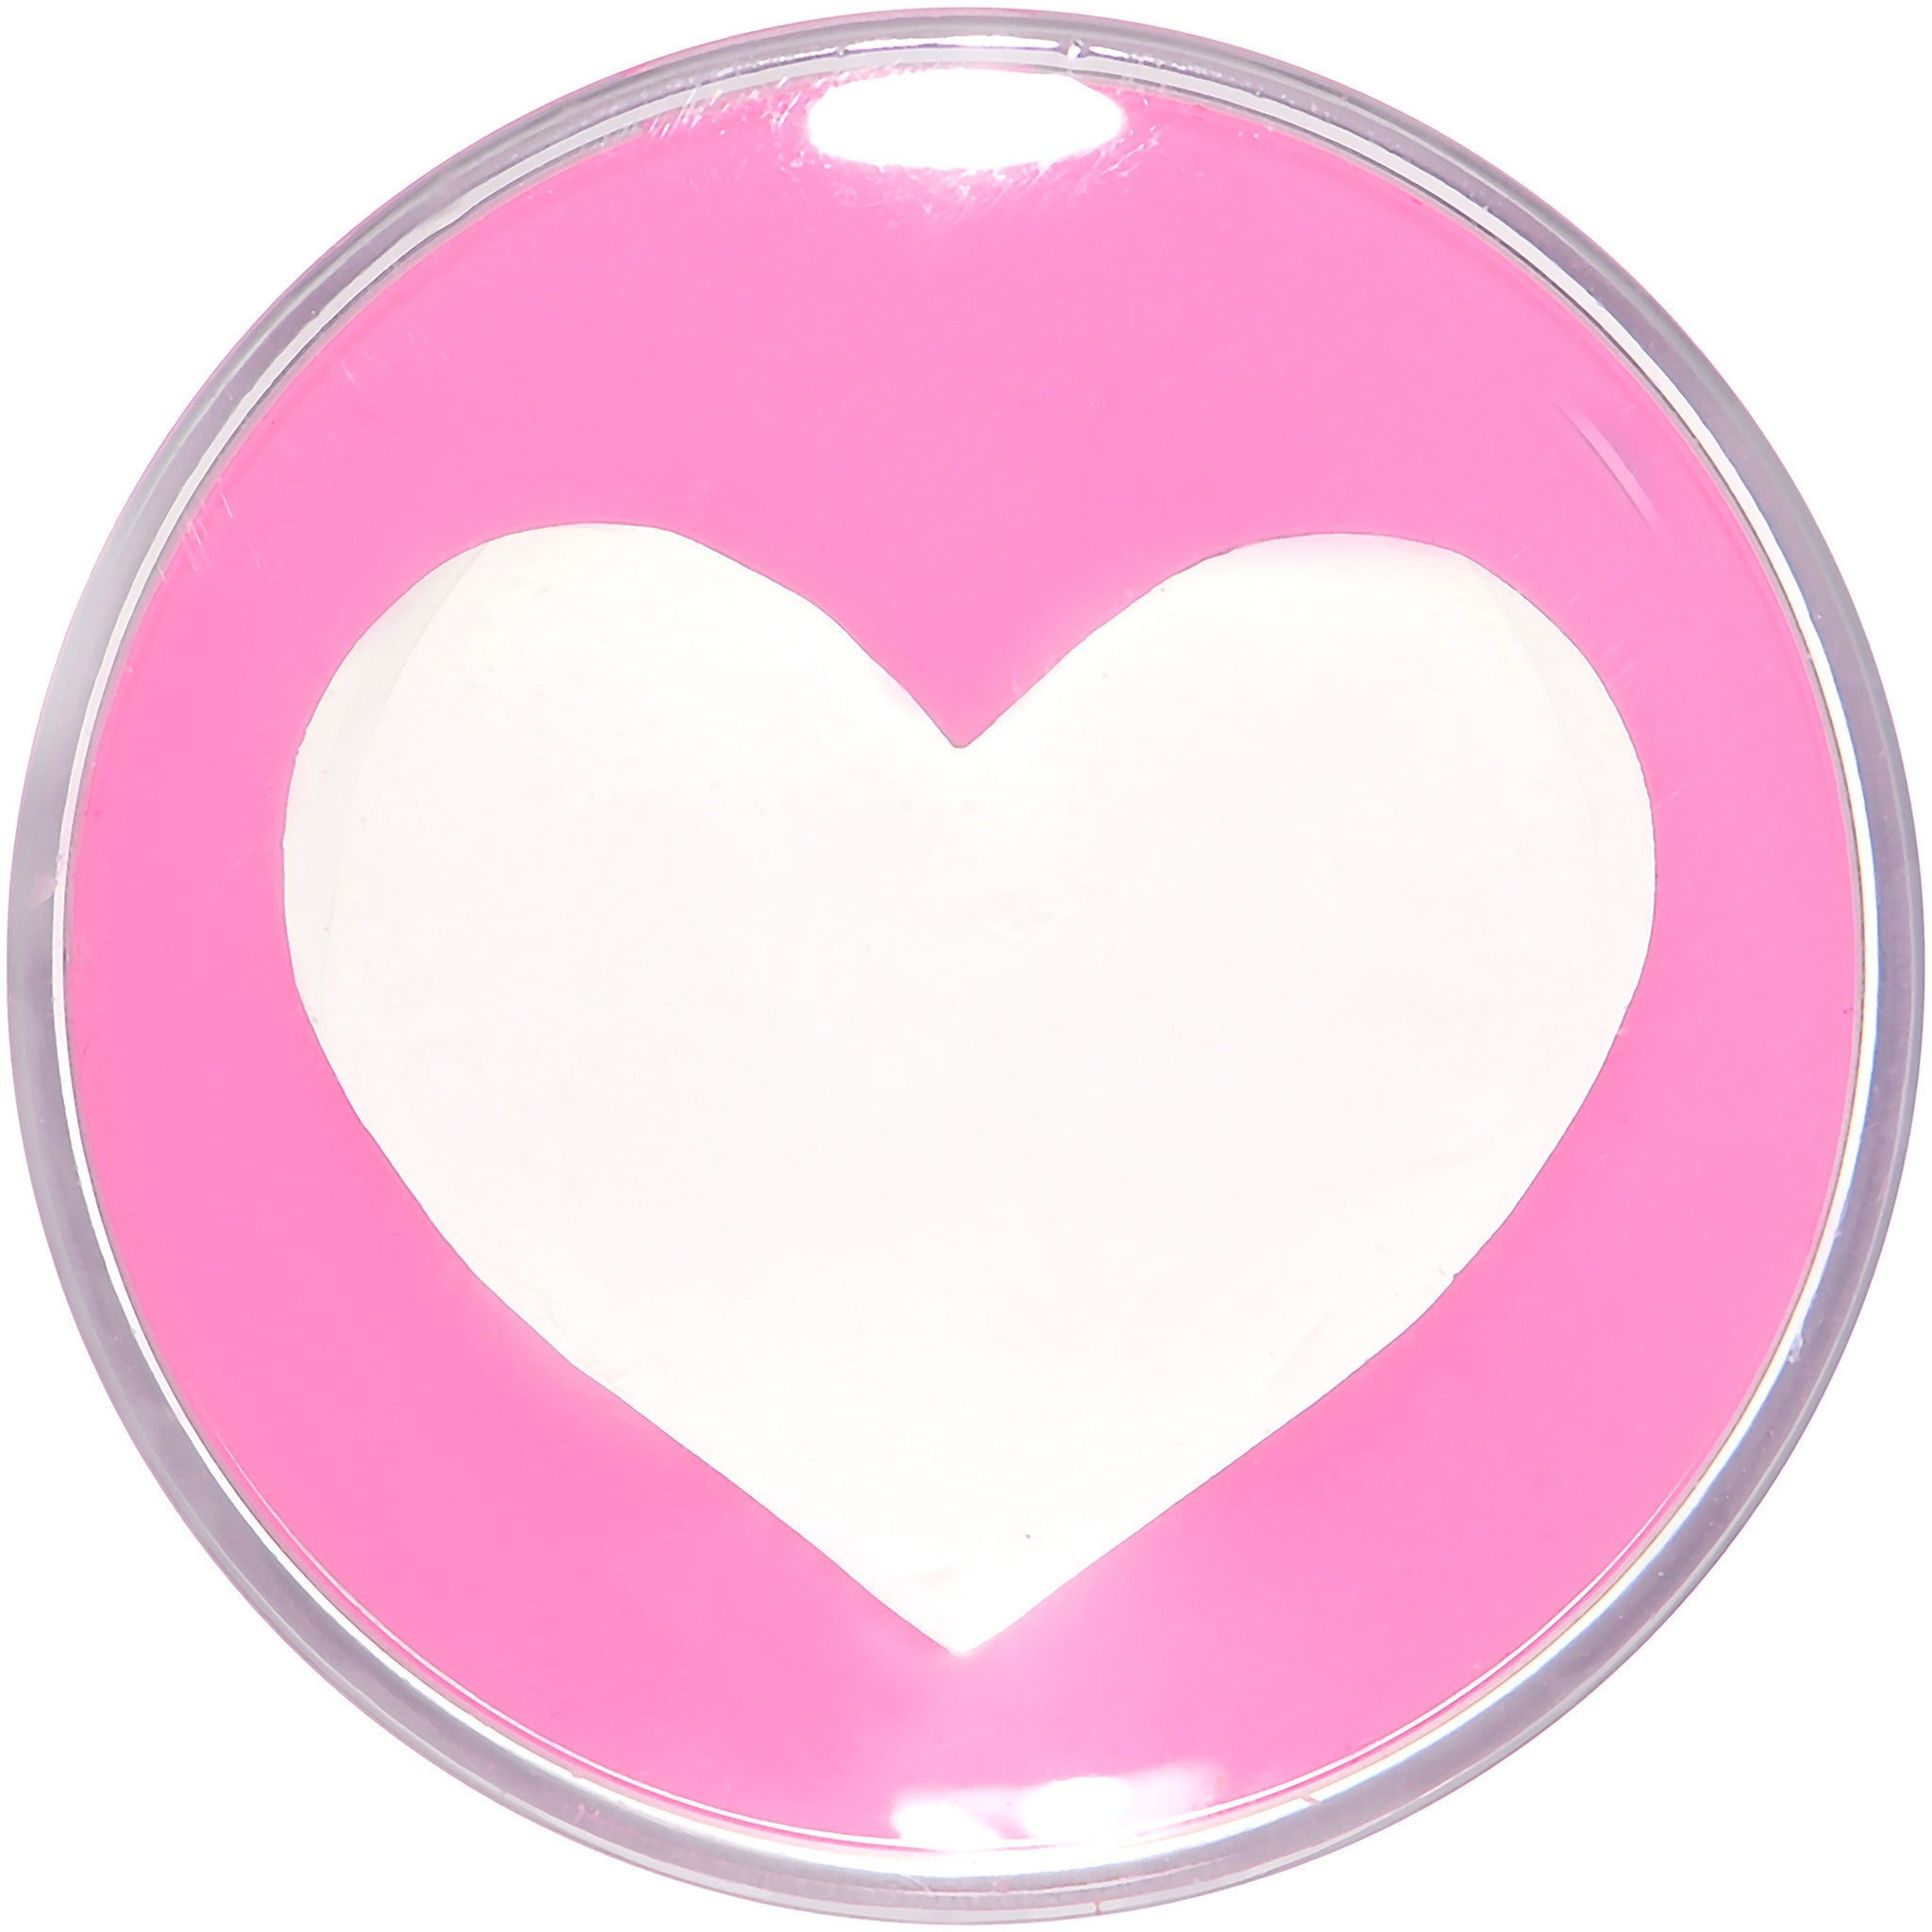 9/16 Clear Pink Acrylic Adoring Heart Saddle Plug